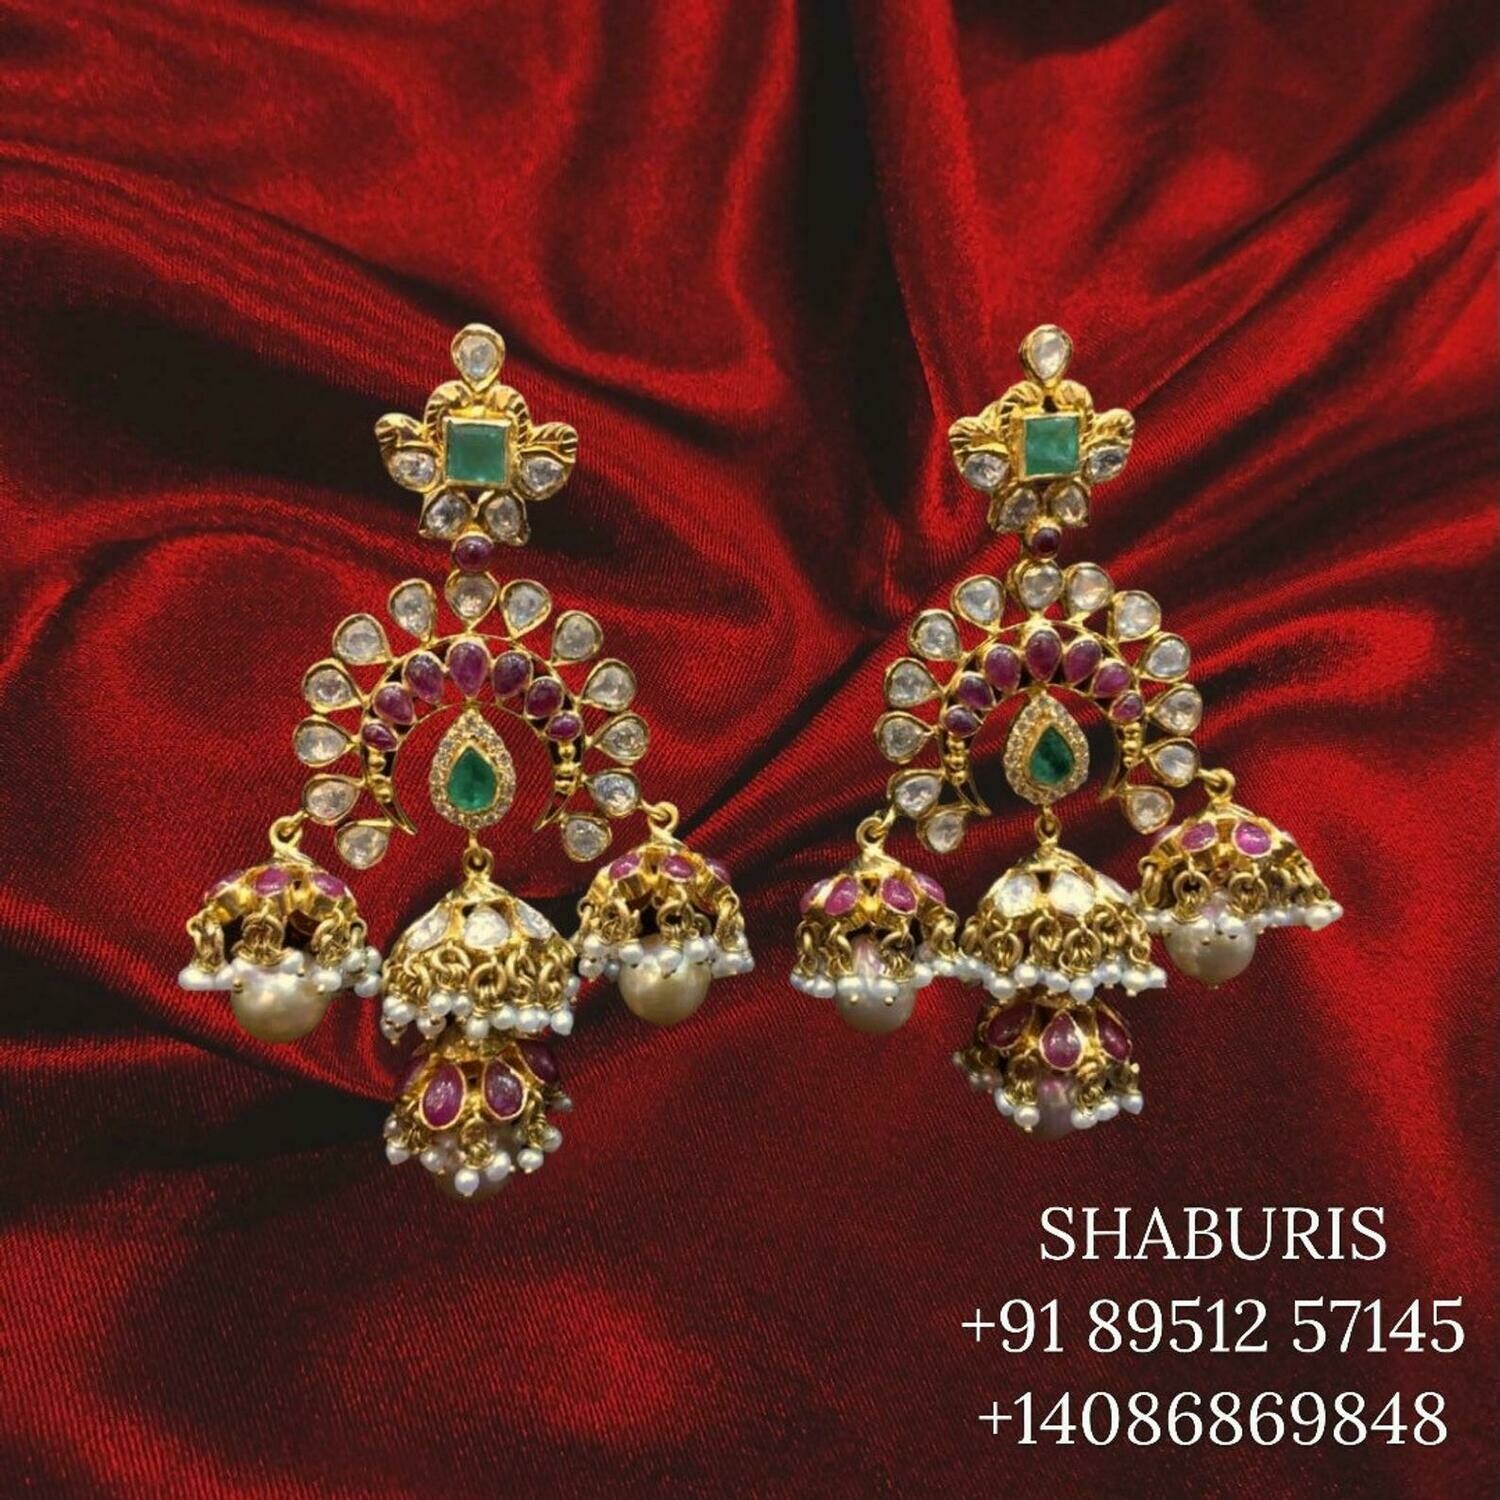 Gem stone jewelry chandbali hyderabad jewelry indian jewelry hyderbadi pearls moghul jewelry pure silver jewelry-polkis-SHABURIS